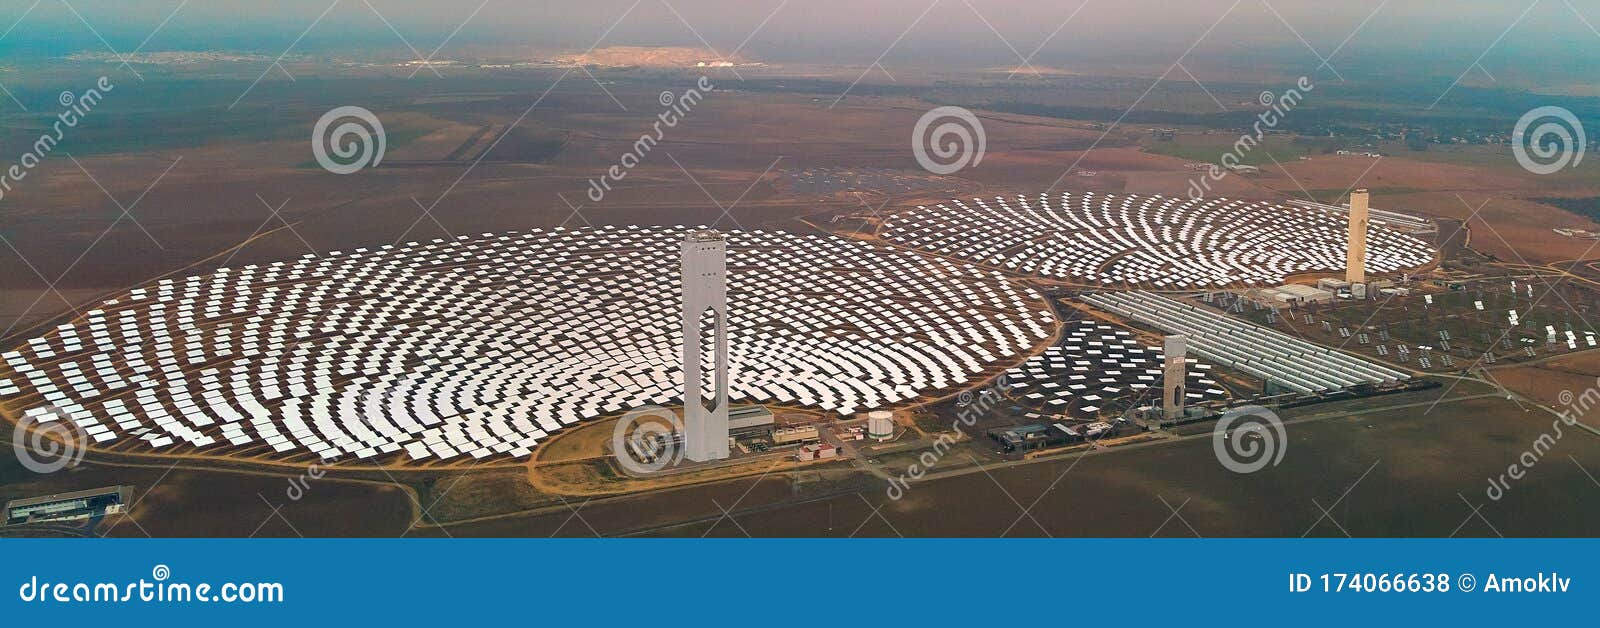 aerial horizontal image gemasolar concentrated solar power plant in sevilla